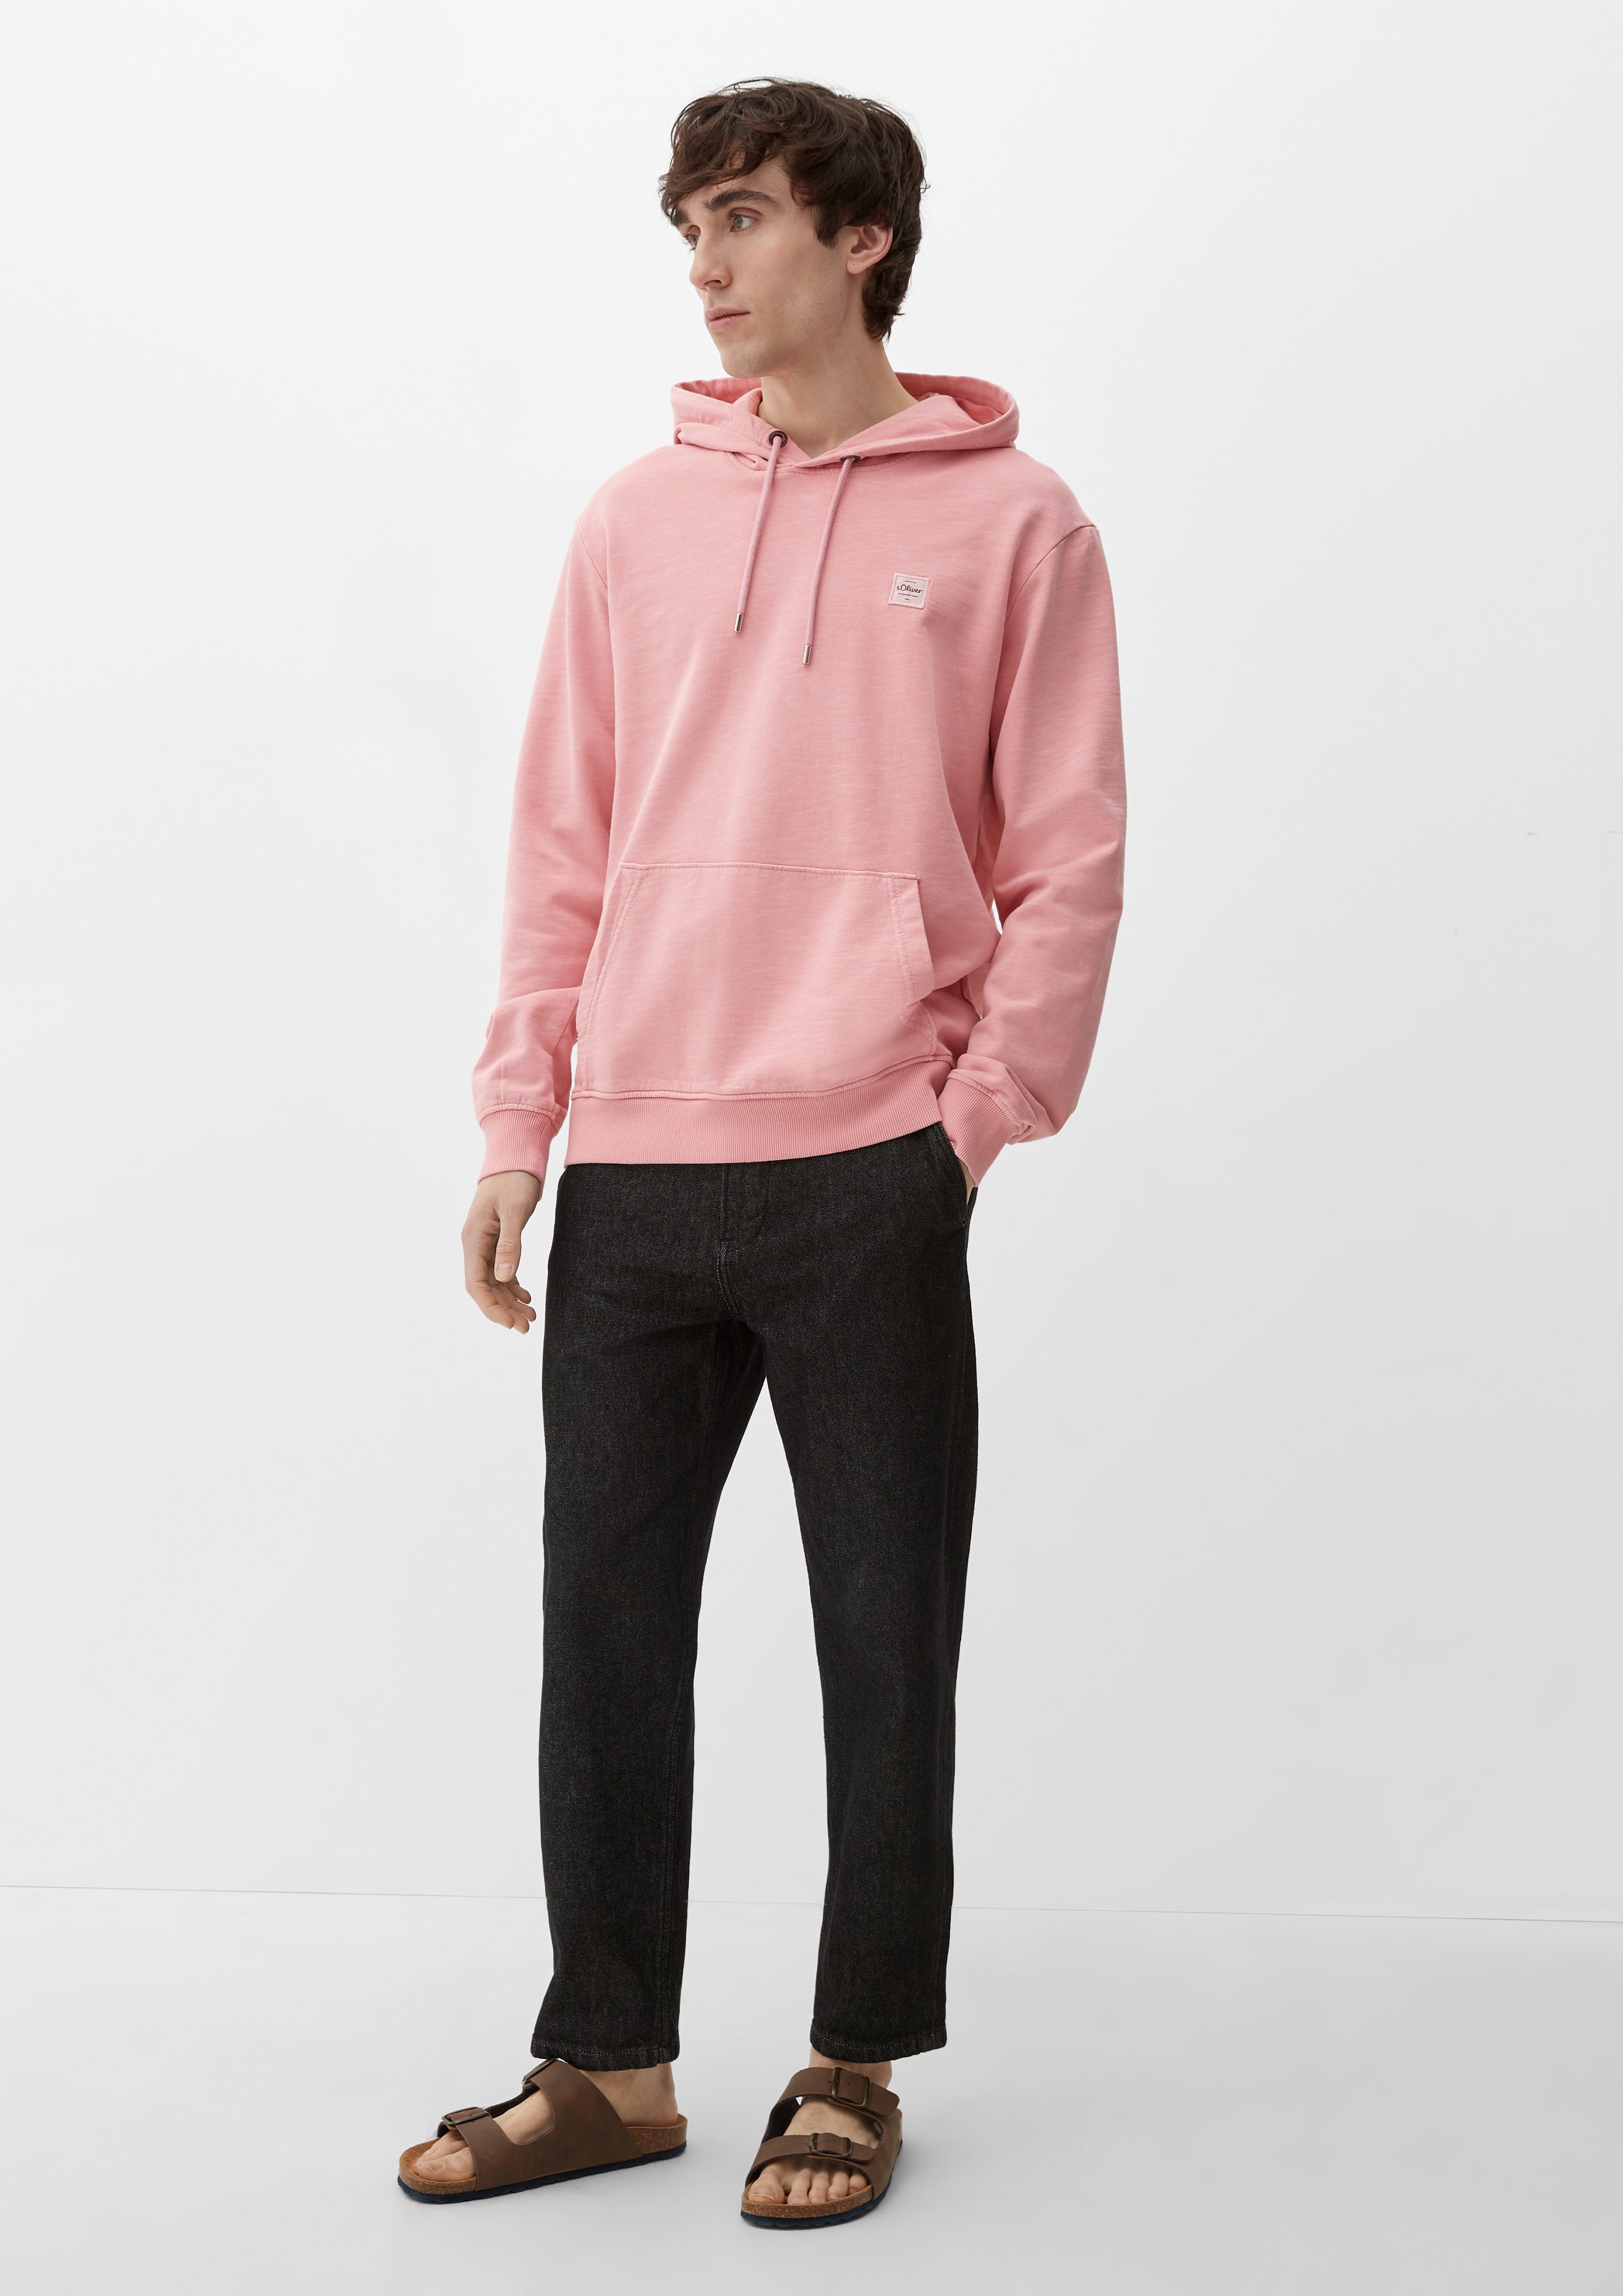 s.Oliver Sweatshirt Kapuzenpullover im Garment Label-Patch rosa Applikation, Dye, Dye Garment